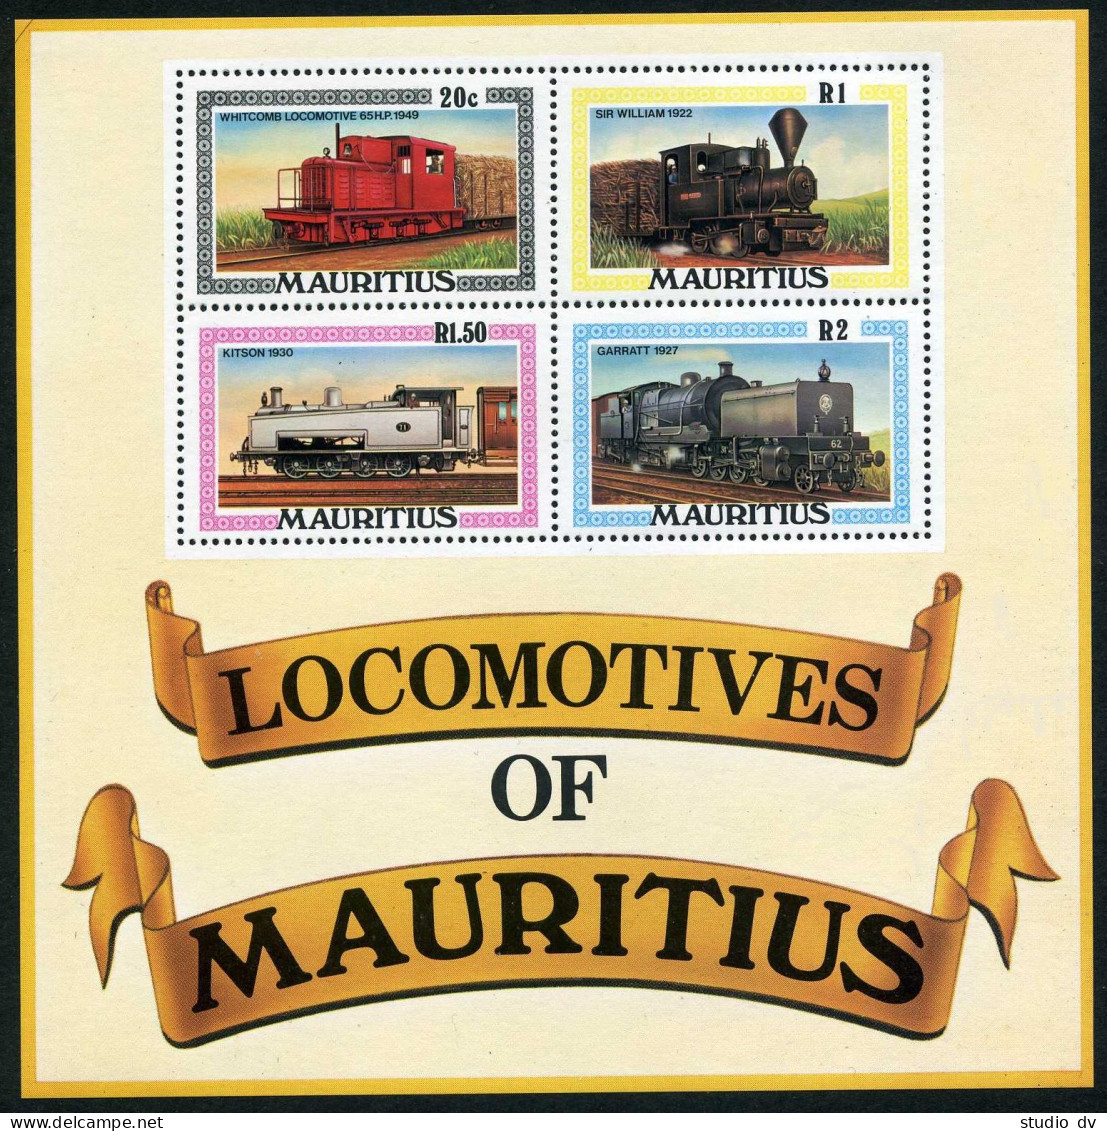 Mauritius 476-479, 479a Sheet, MNH. Michel 470-473, Bl.9. Locomotives 1979. - Mauritius (1968-...)